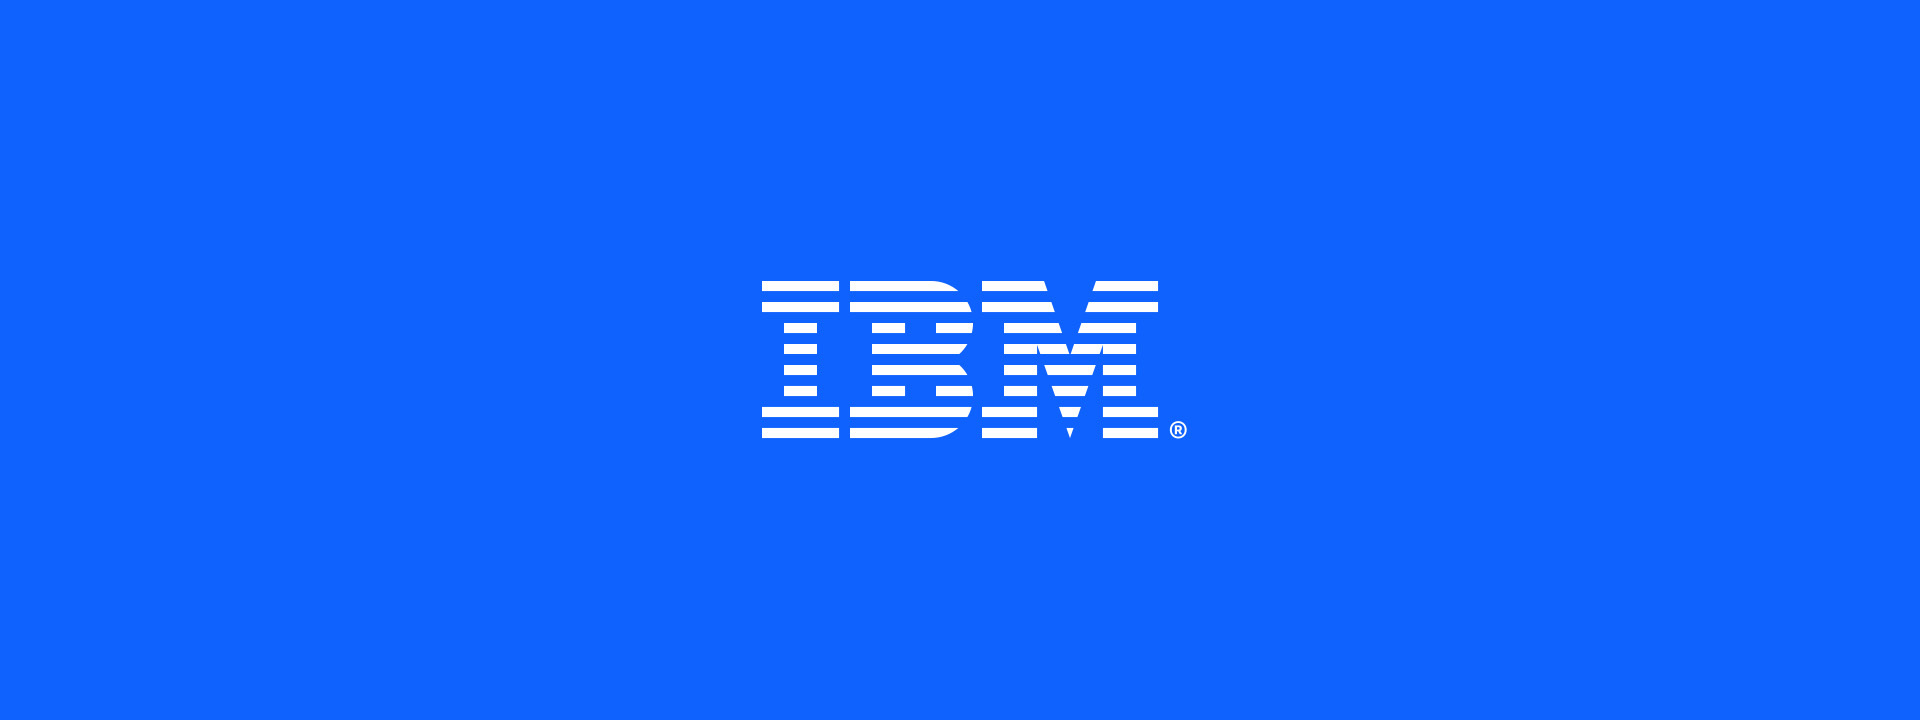 IBM 以 21.3 亿欧元从 Software AG 收购两个数据平台的标题可以重写为：IBM 以 21.3 亿欧元完成对 Software AG 两个数据平台的收购